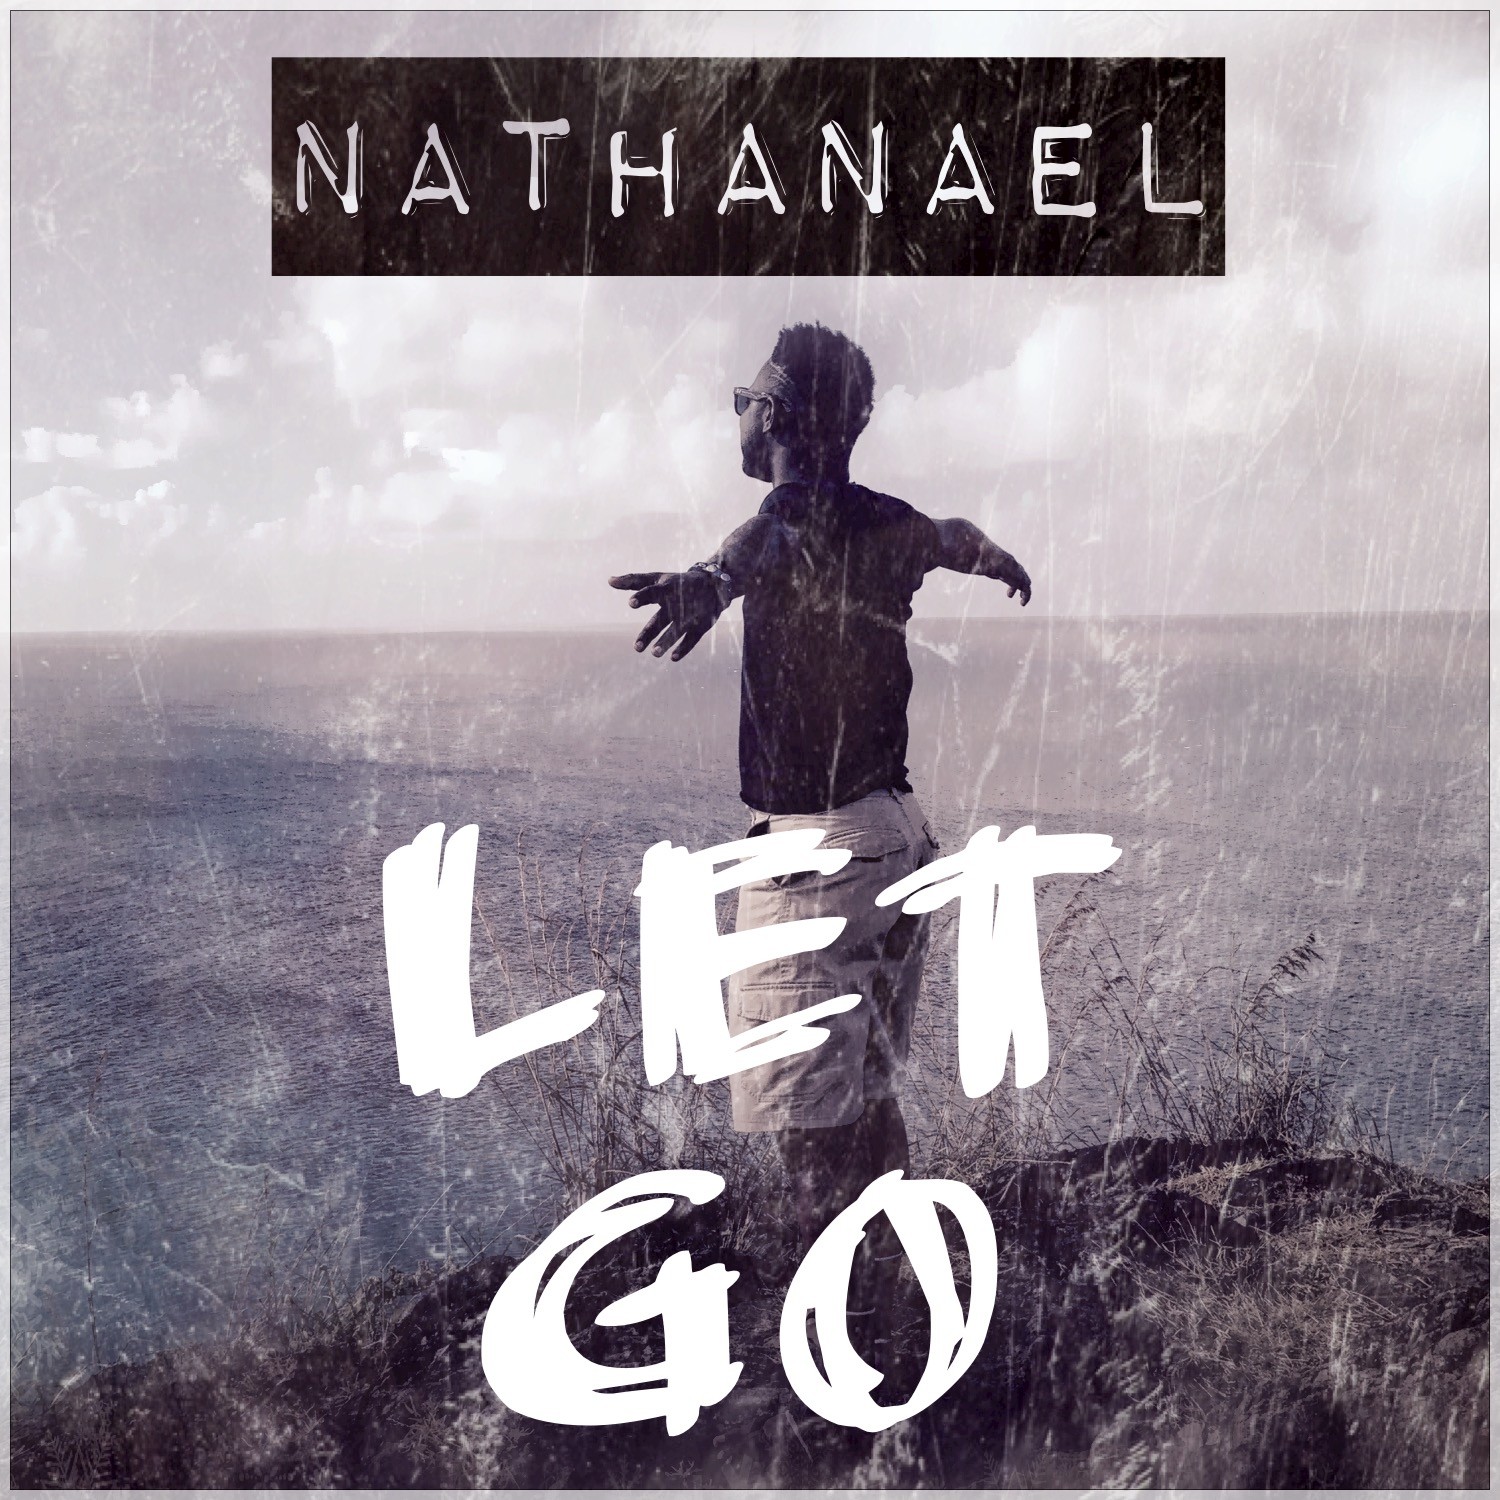 I m not let you go. Let'go. Let's go!. Ennja. Альбом Let go. Lets go песня.